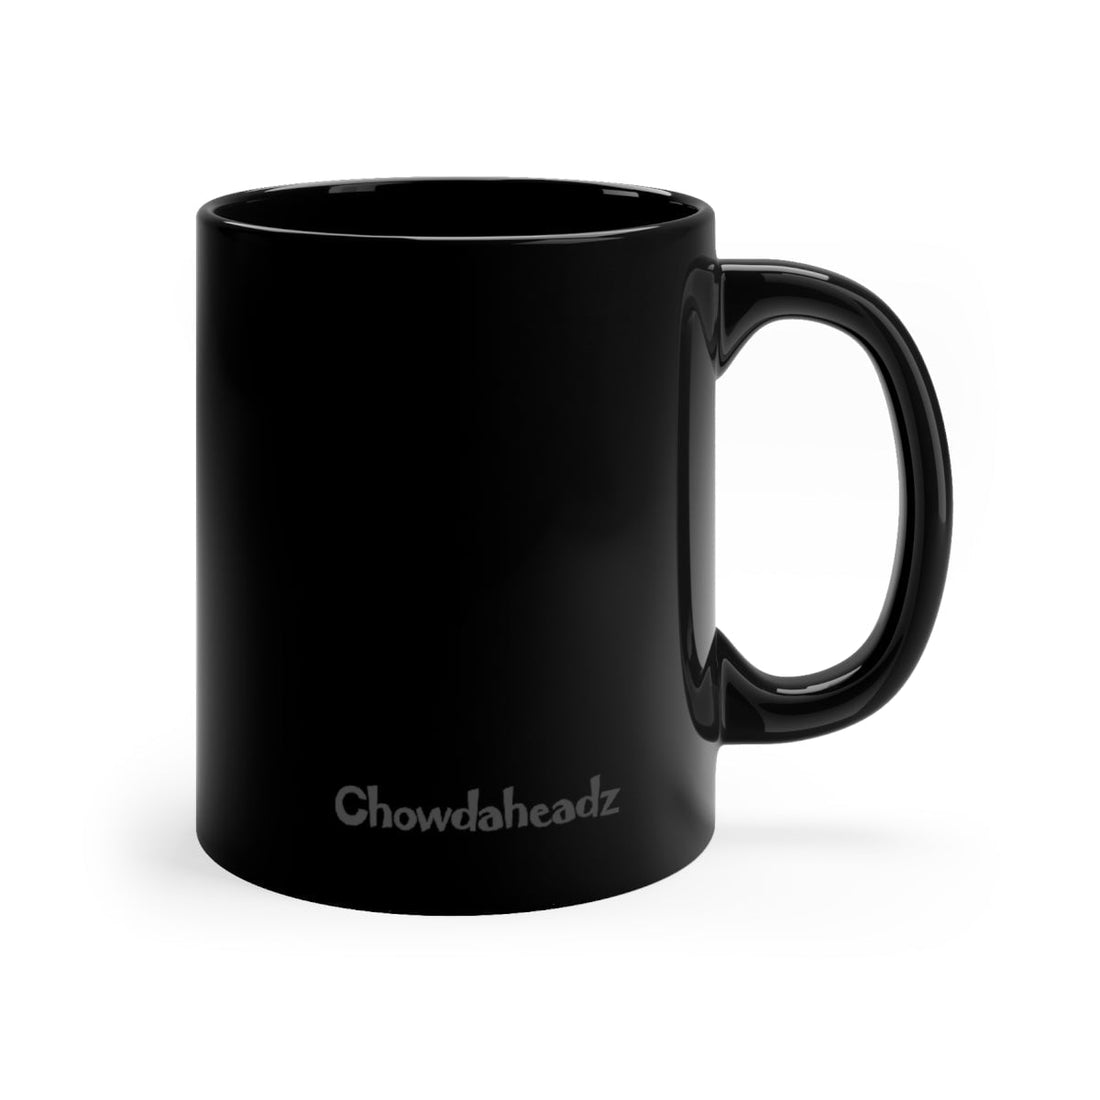 Socks on Moose 11oz Coffee Mug - Chowdaheadz